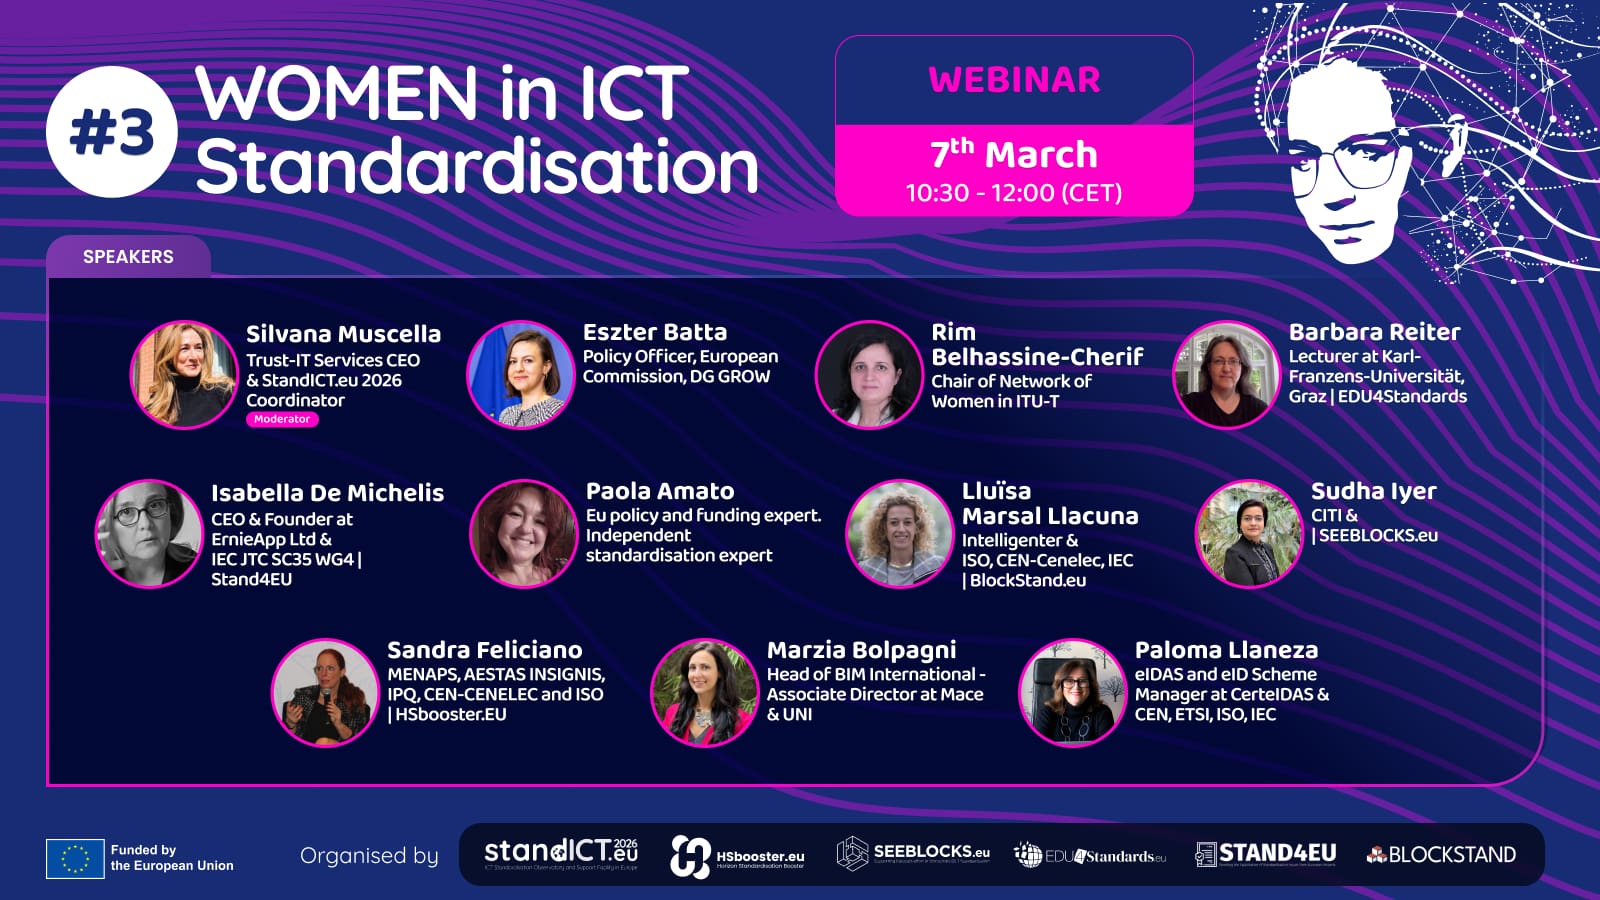 Webinar - Women in ICT Standardisation, third edition 11 speakers